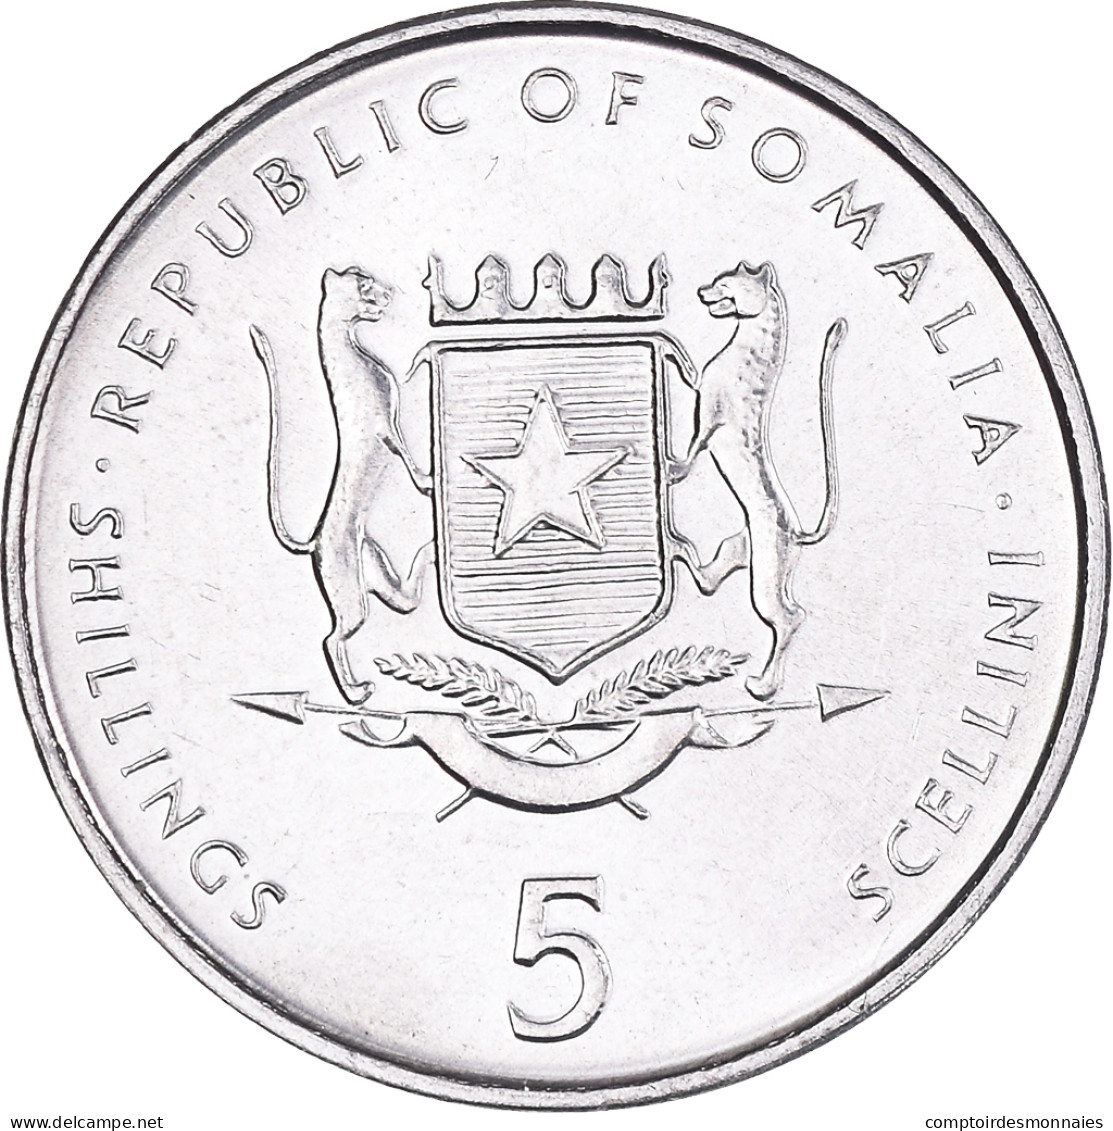 Monnaie, Somalie, 5 Shilling / Scellini, 2000, SUP+, Aluminium, KM:45 - Somalie